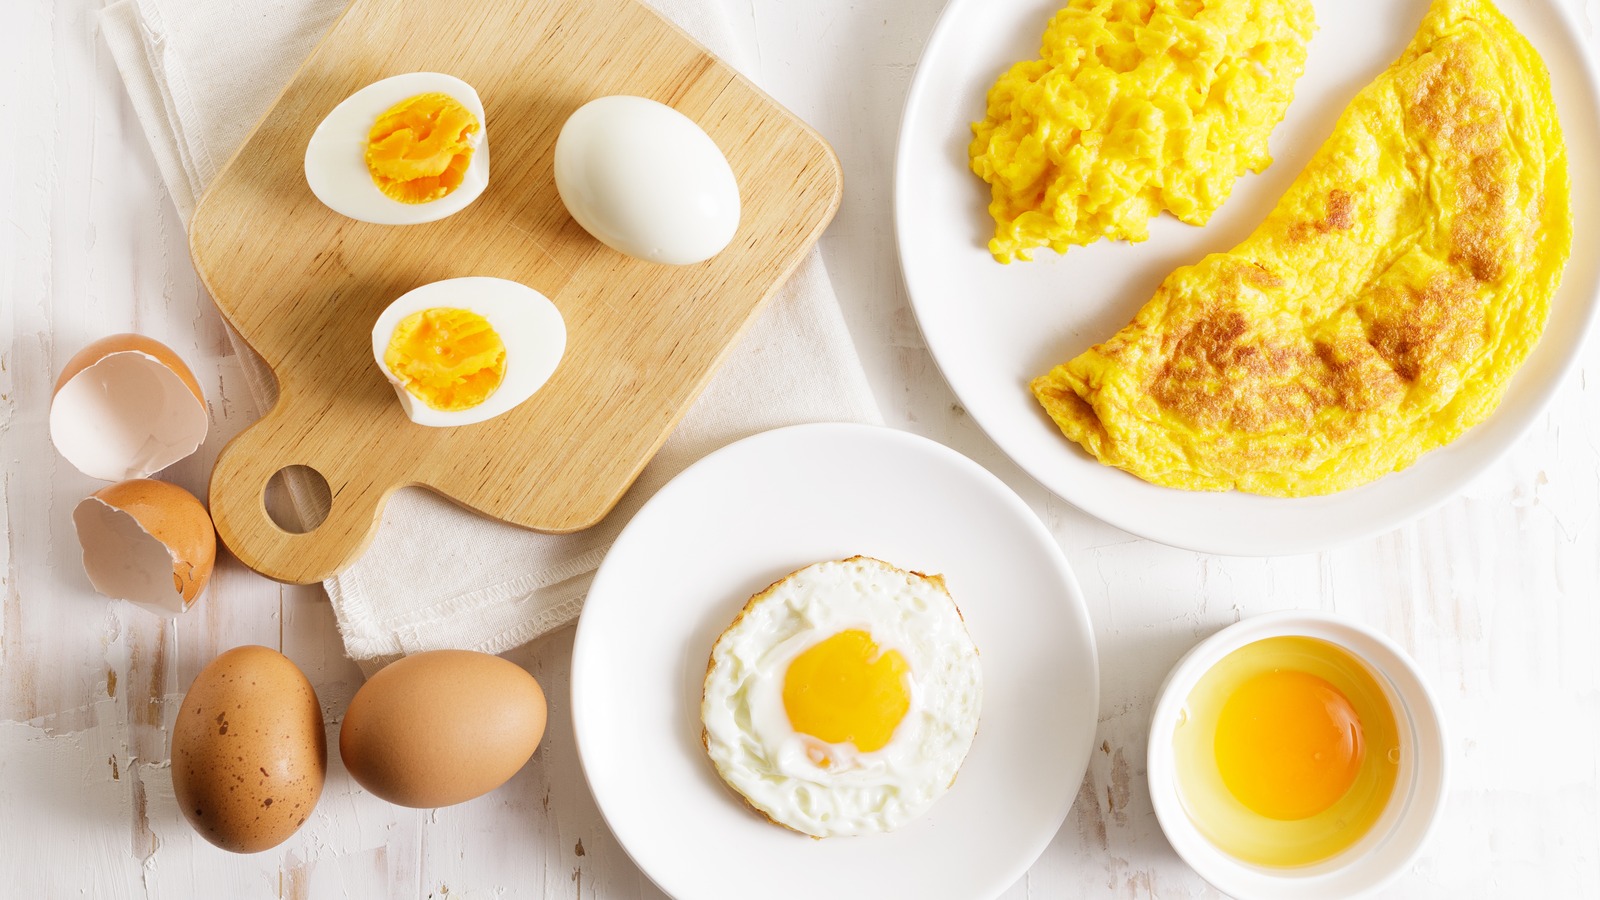 15 Creative Egg Gadgets That Will Make Breakfast Way More Fun